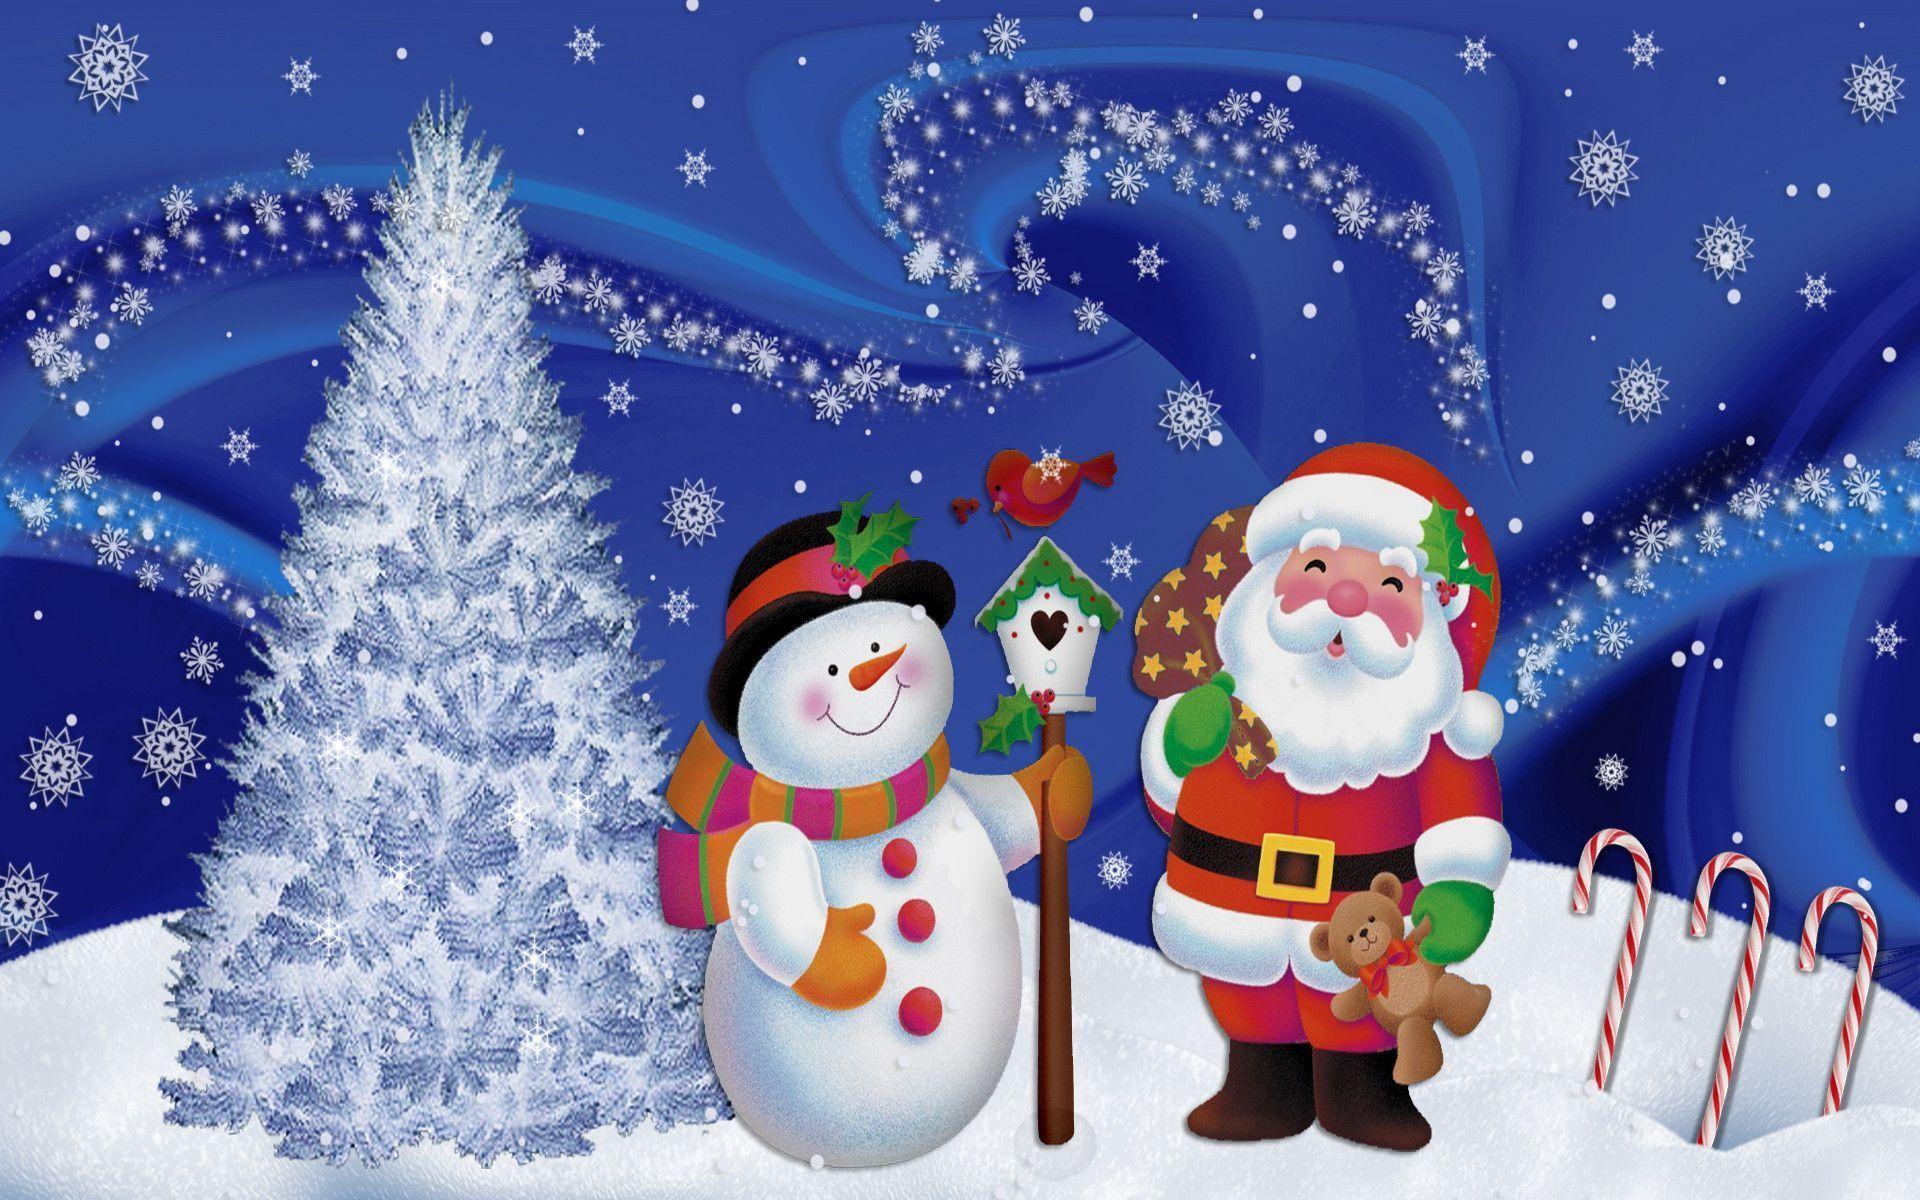 Snowman And Santa Claus In Christmas Wallpaper Wallpaper